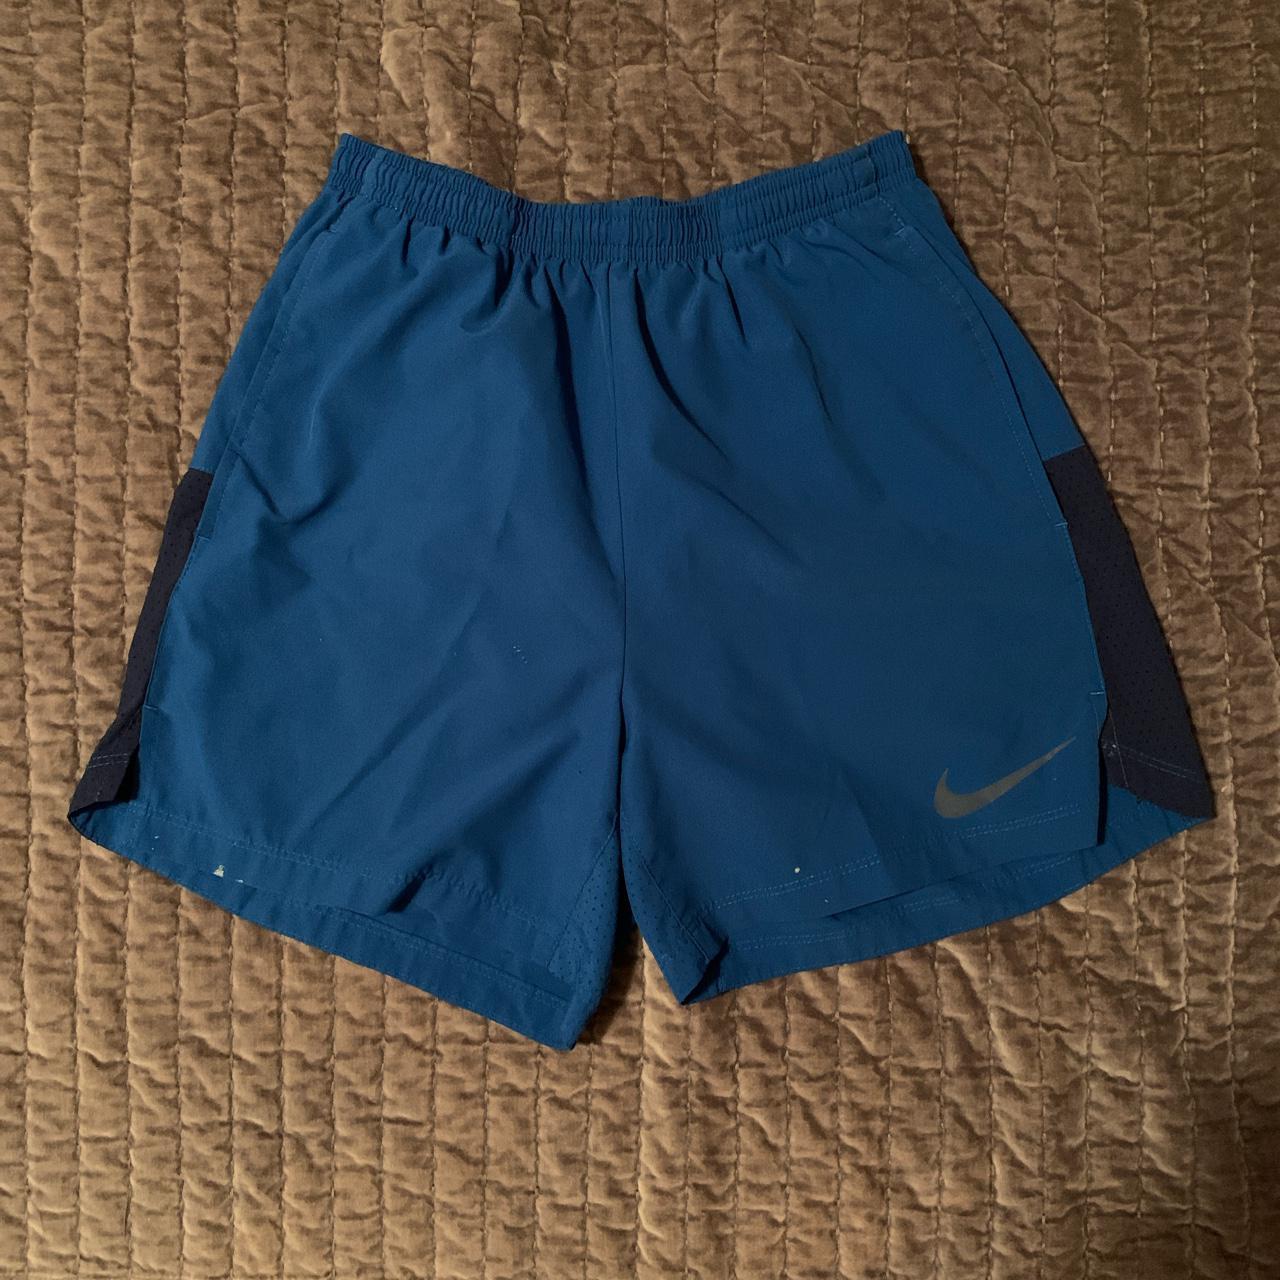 Nike Dri-fit shorts Dark blue Size small Netting on... - Depop